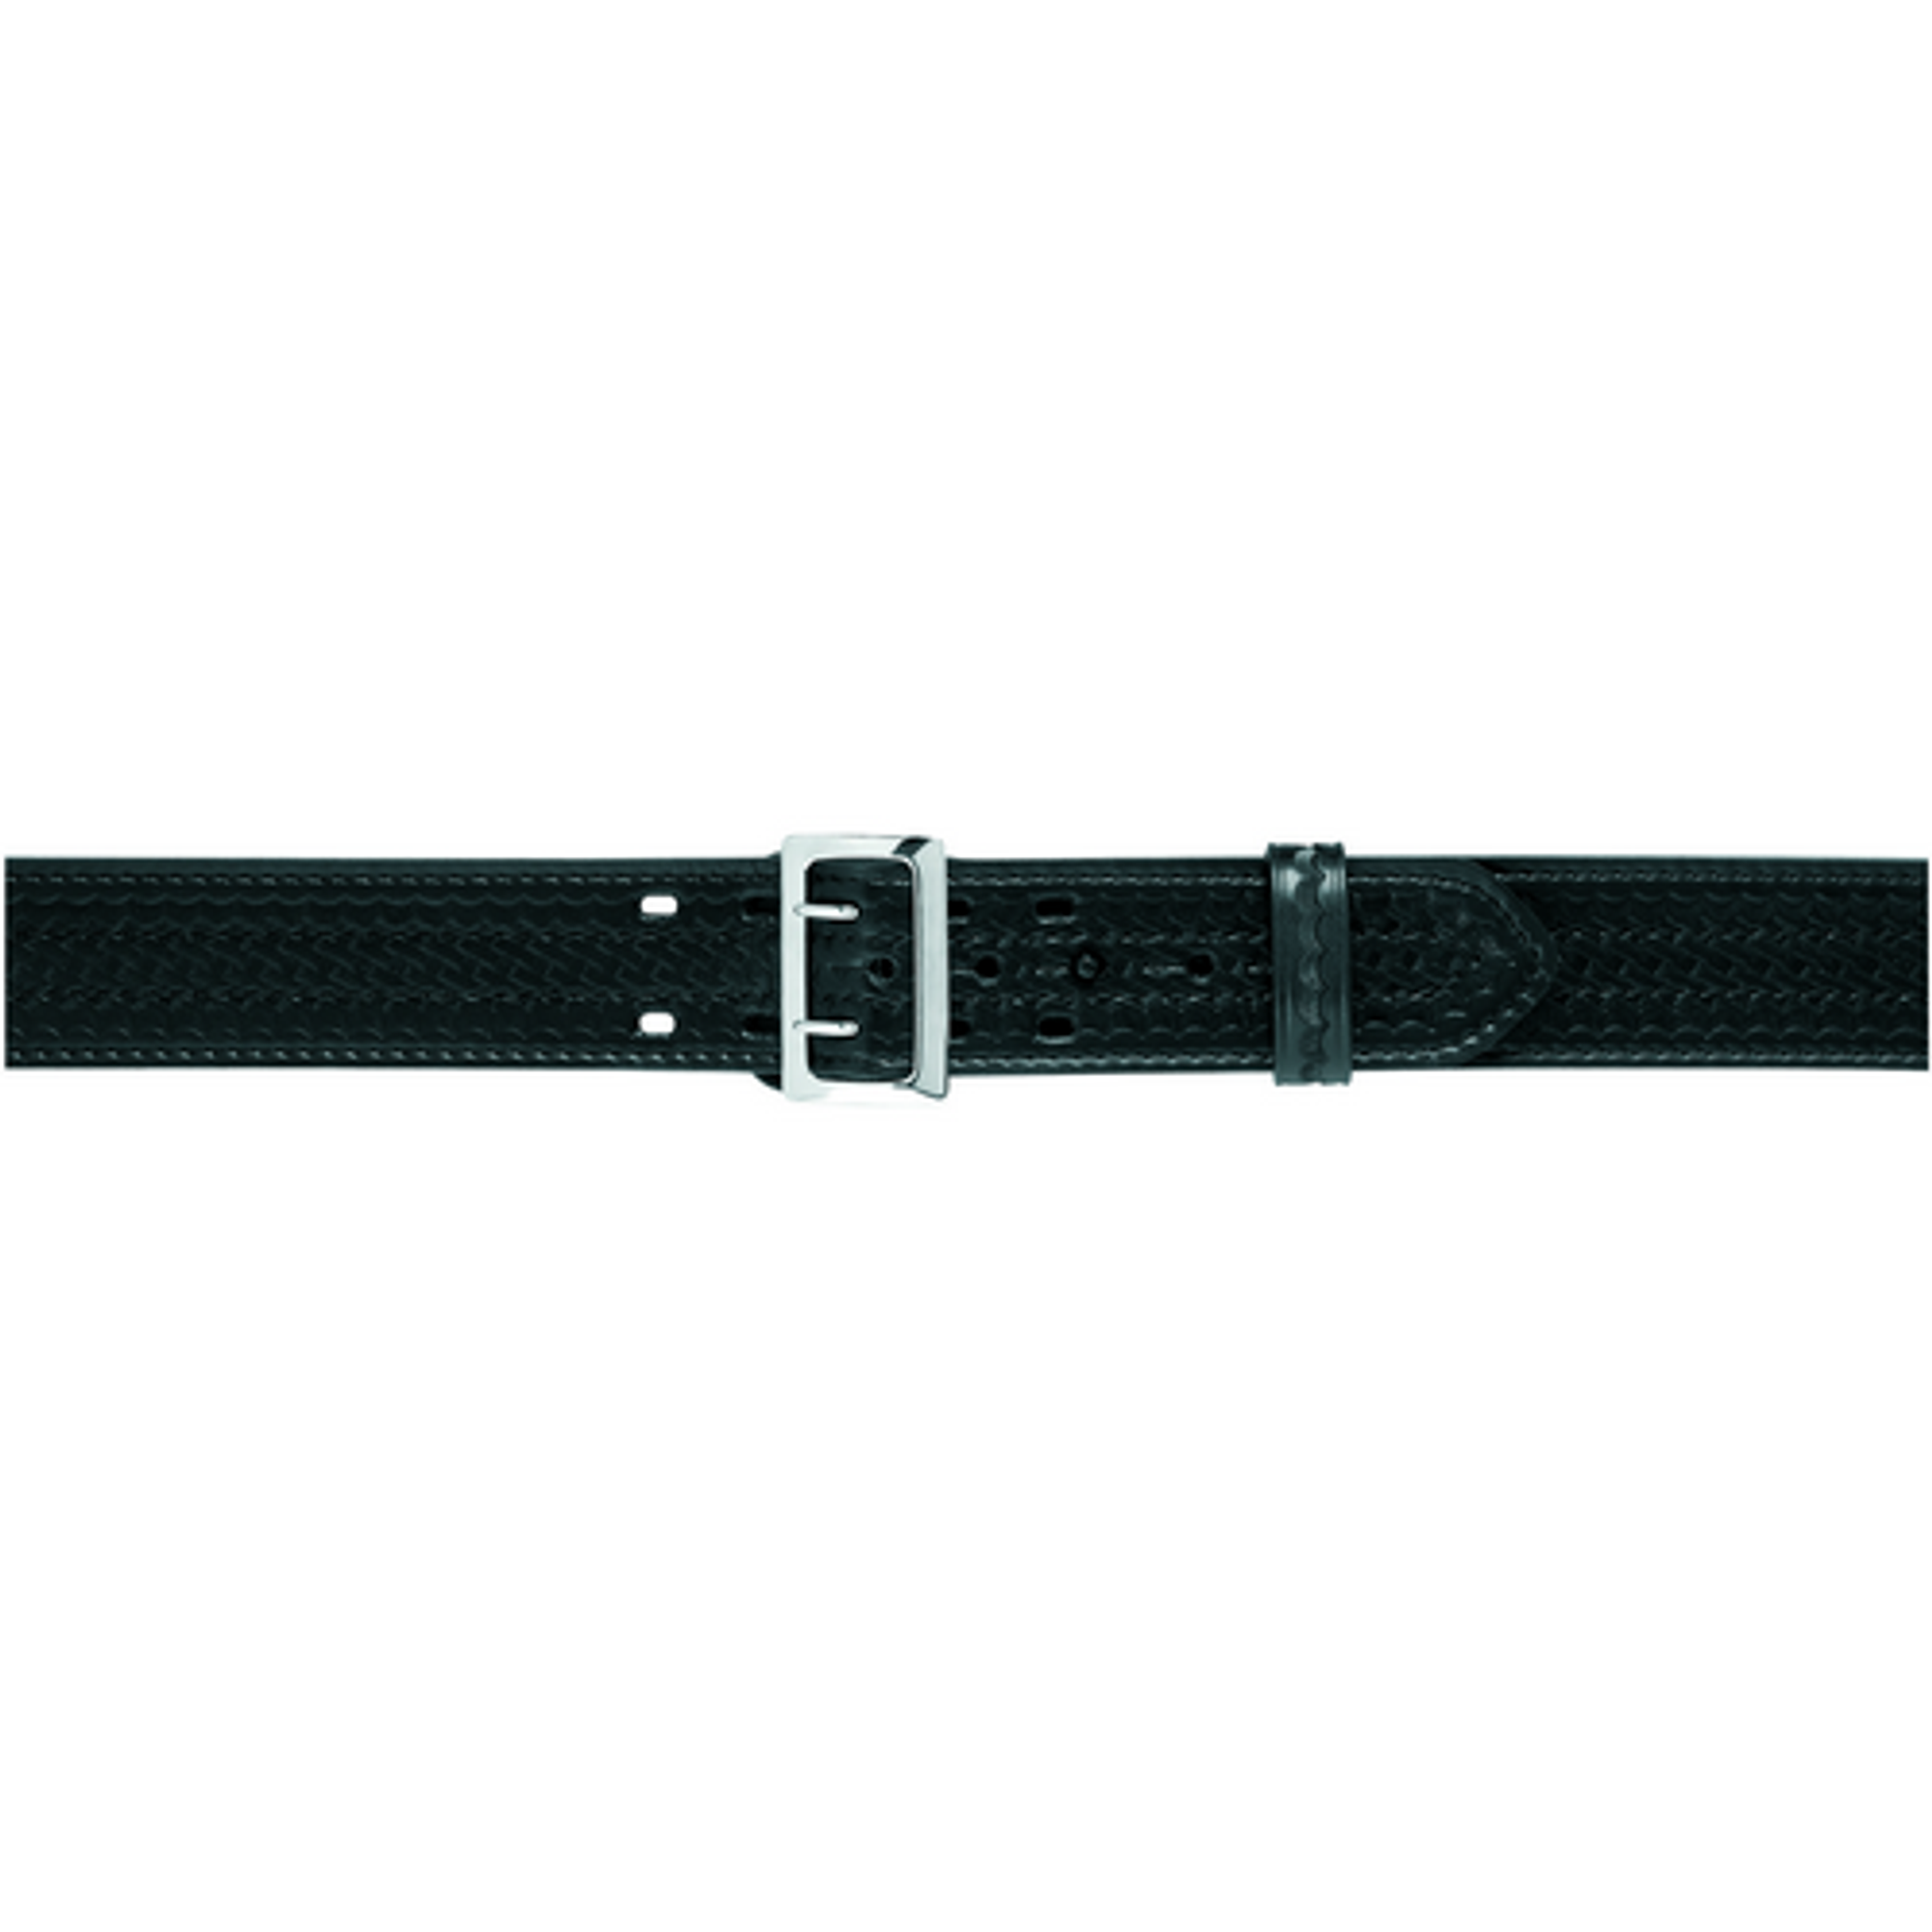 875 - Stitched Edge Sam Browne Duty Belt 2.25 (58mm) - KR875-40-8